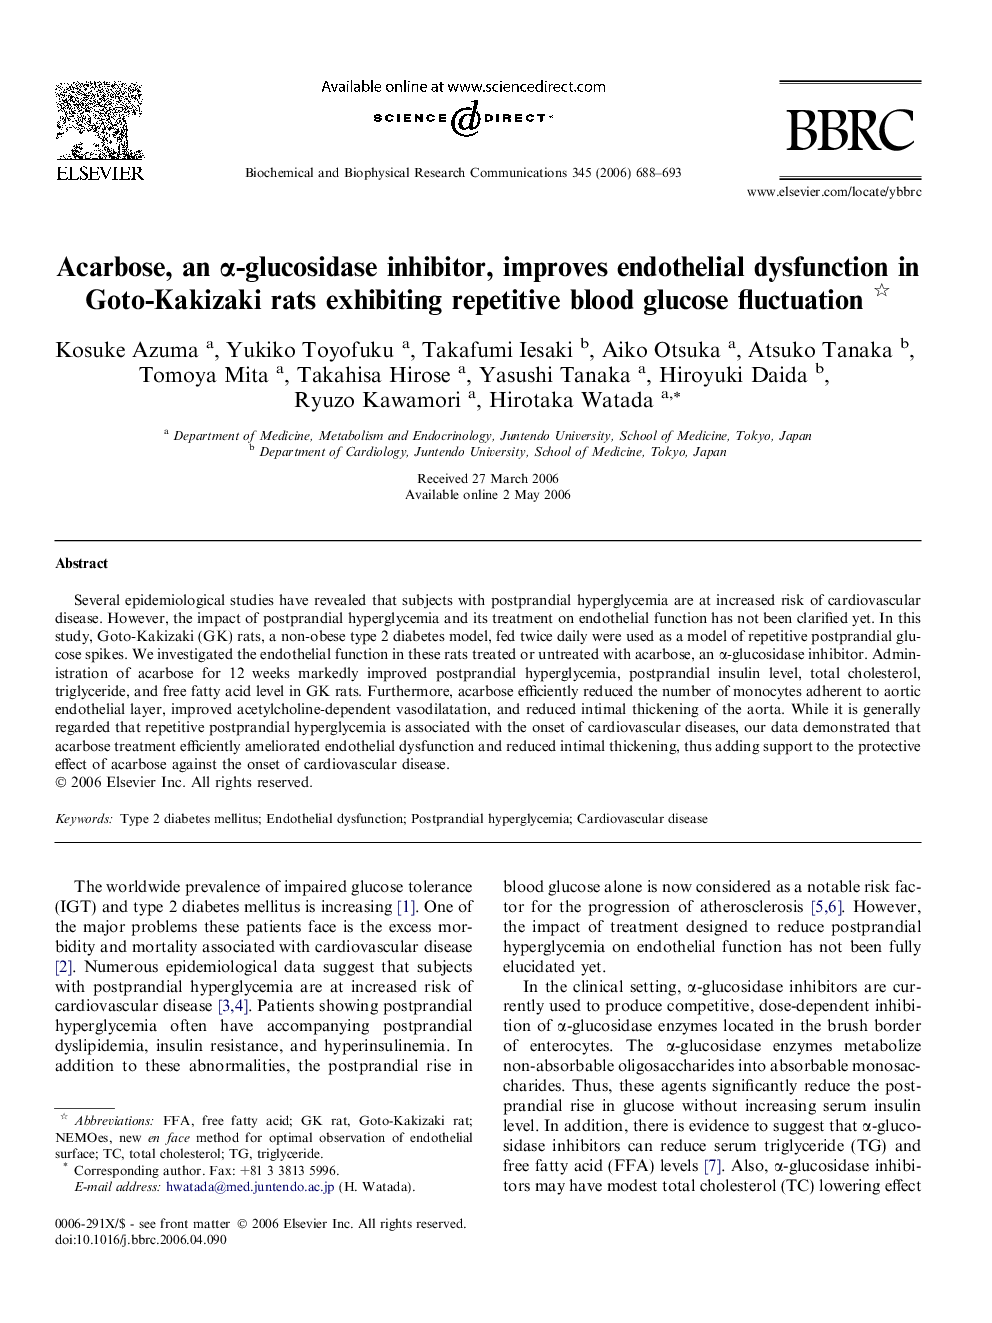 Acarbose, an α-glucosidase inhibitor, improves endothelial dysfunction in Goto-Kakizaki rats exhibiting repetitive blood glucose fluctuation 